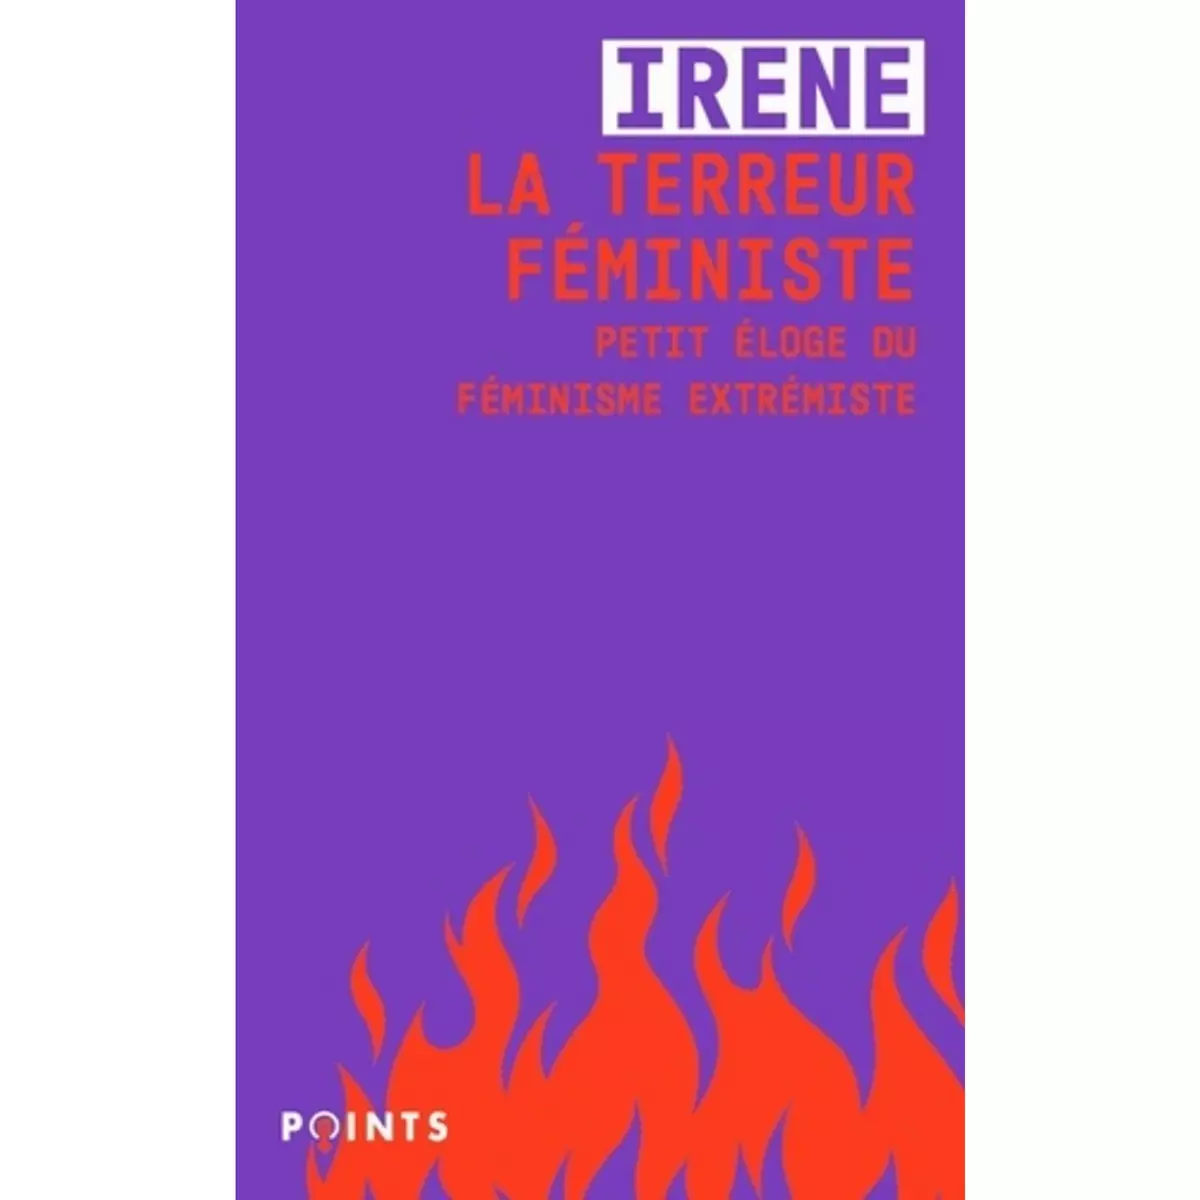  LA TERREUR FEMINISTE. PETIT ELOGE DU FEMINISME EXTREMISTE, Irene